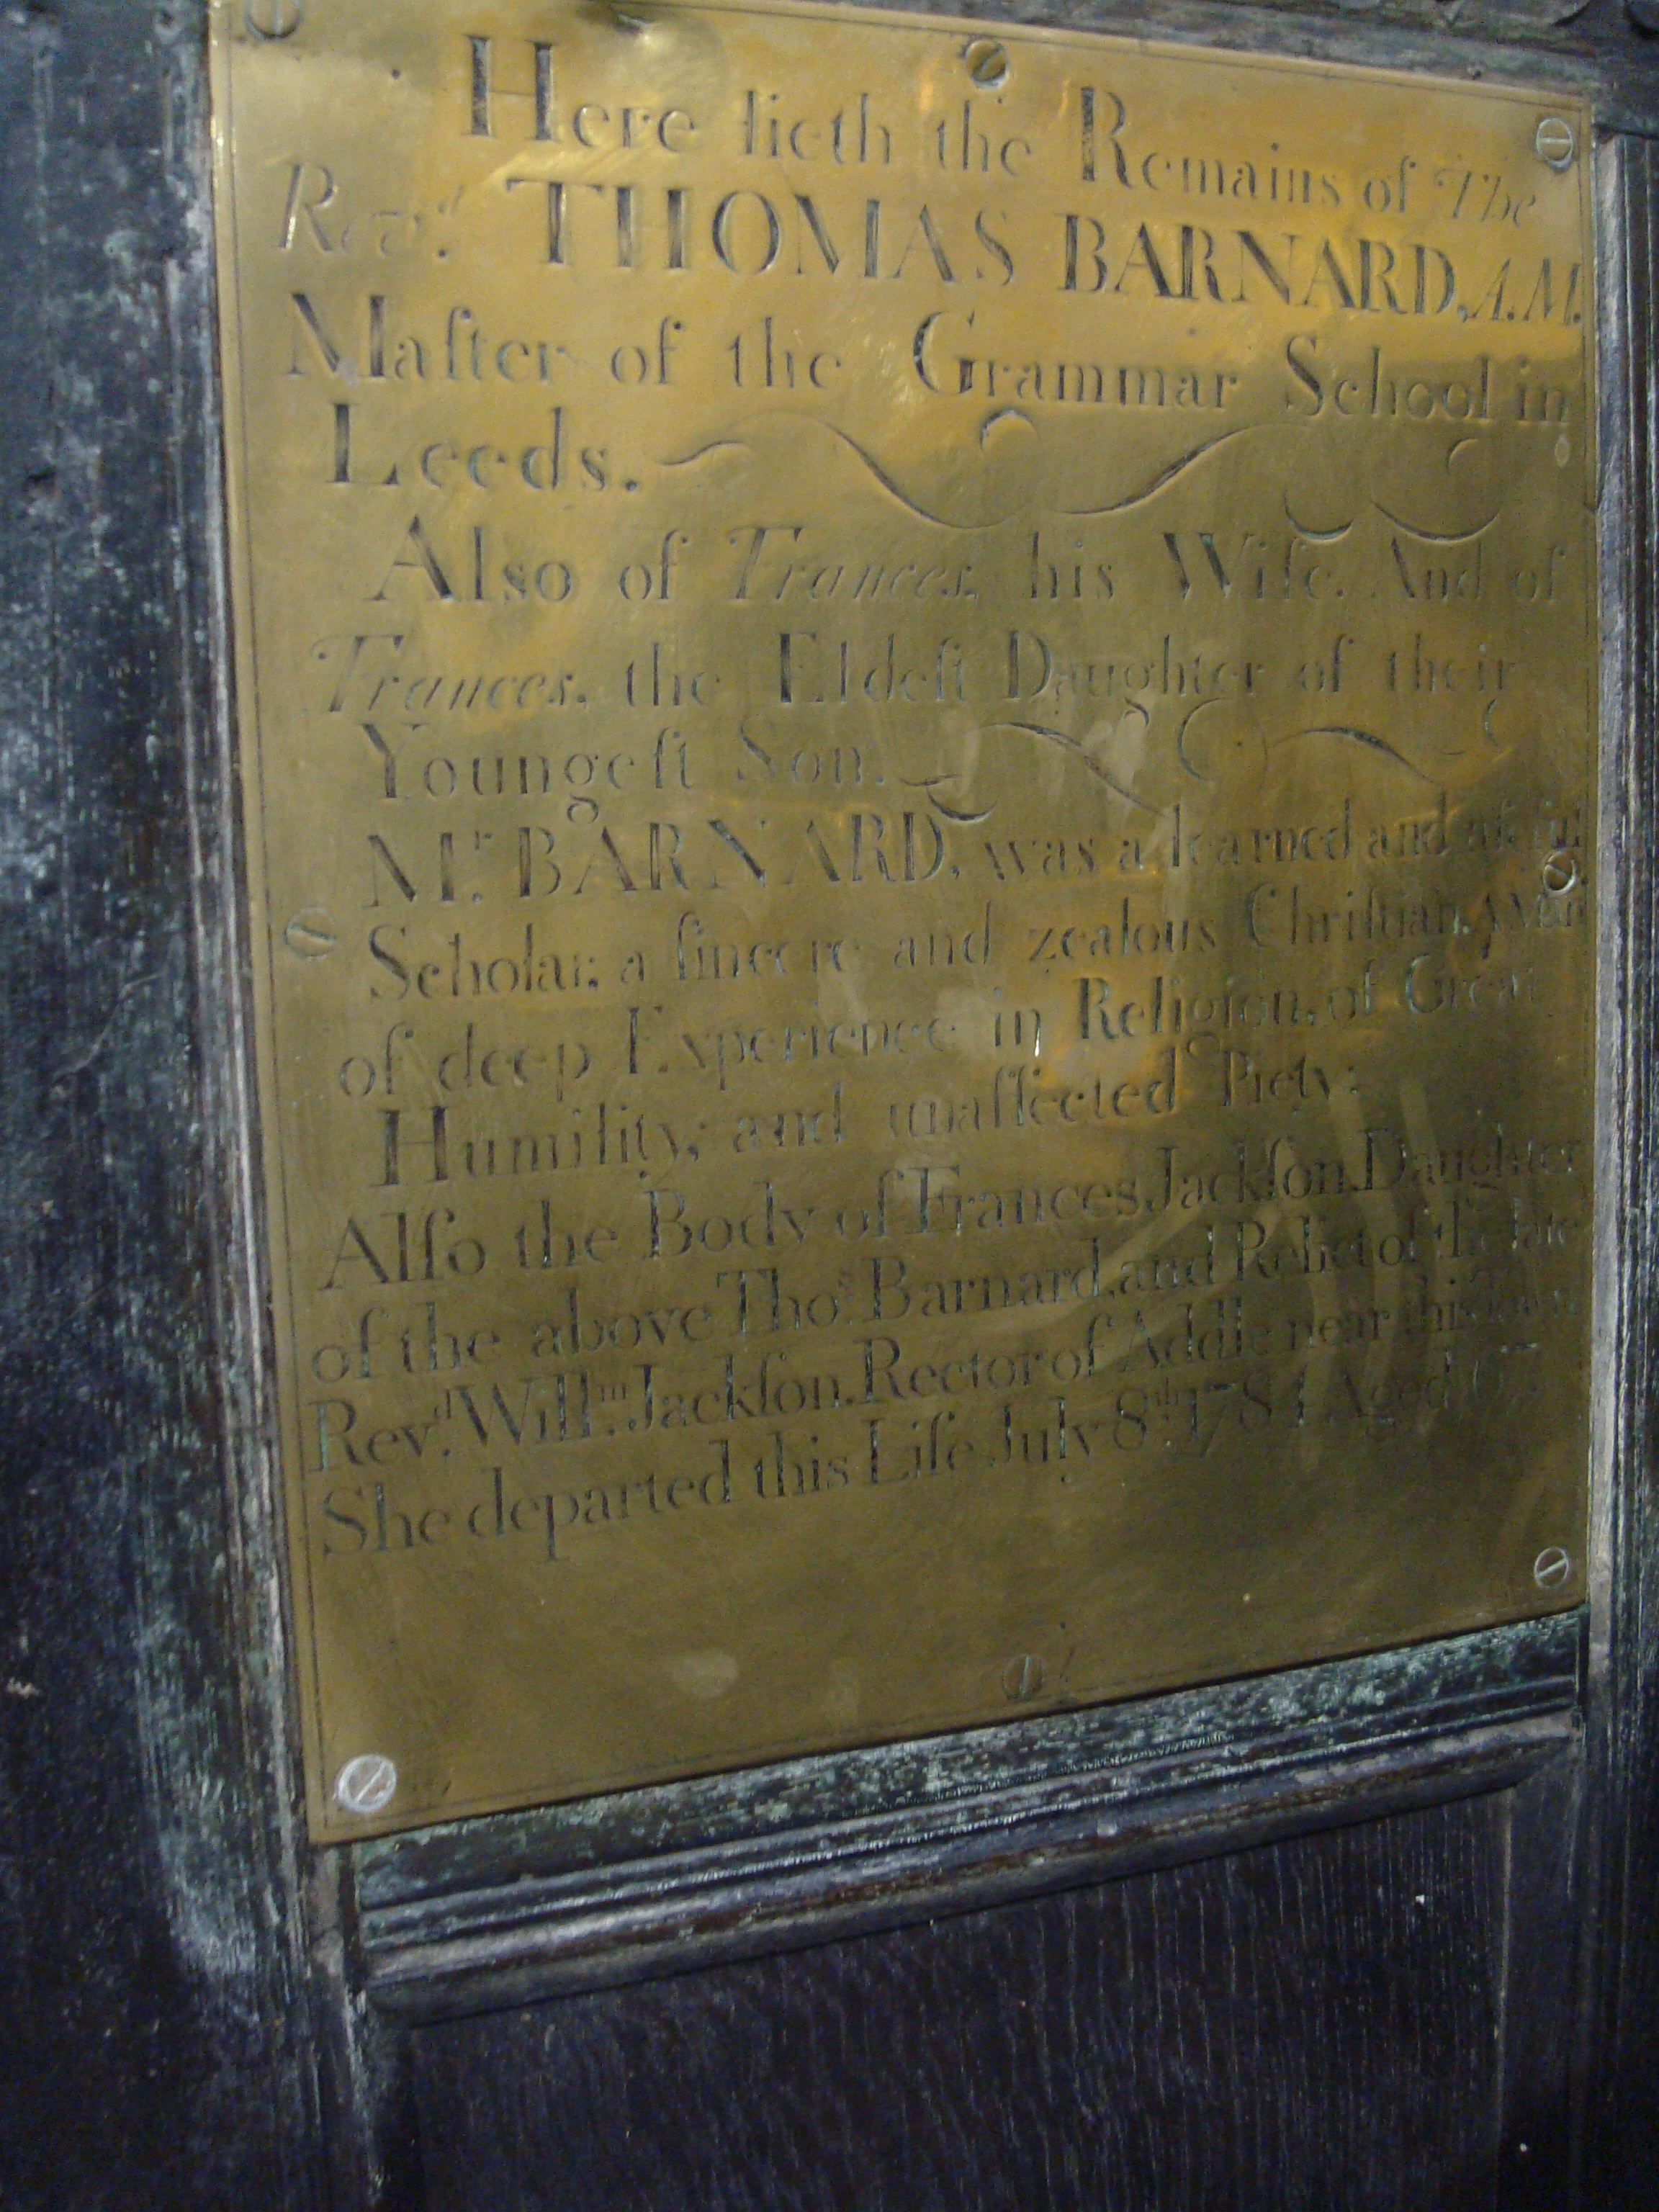 Memorial Plaque at St John's, Leeds [BAR/123]